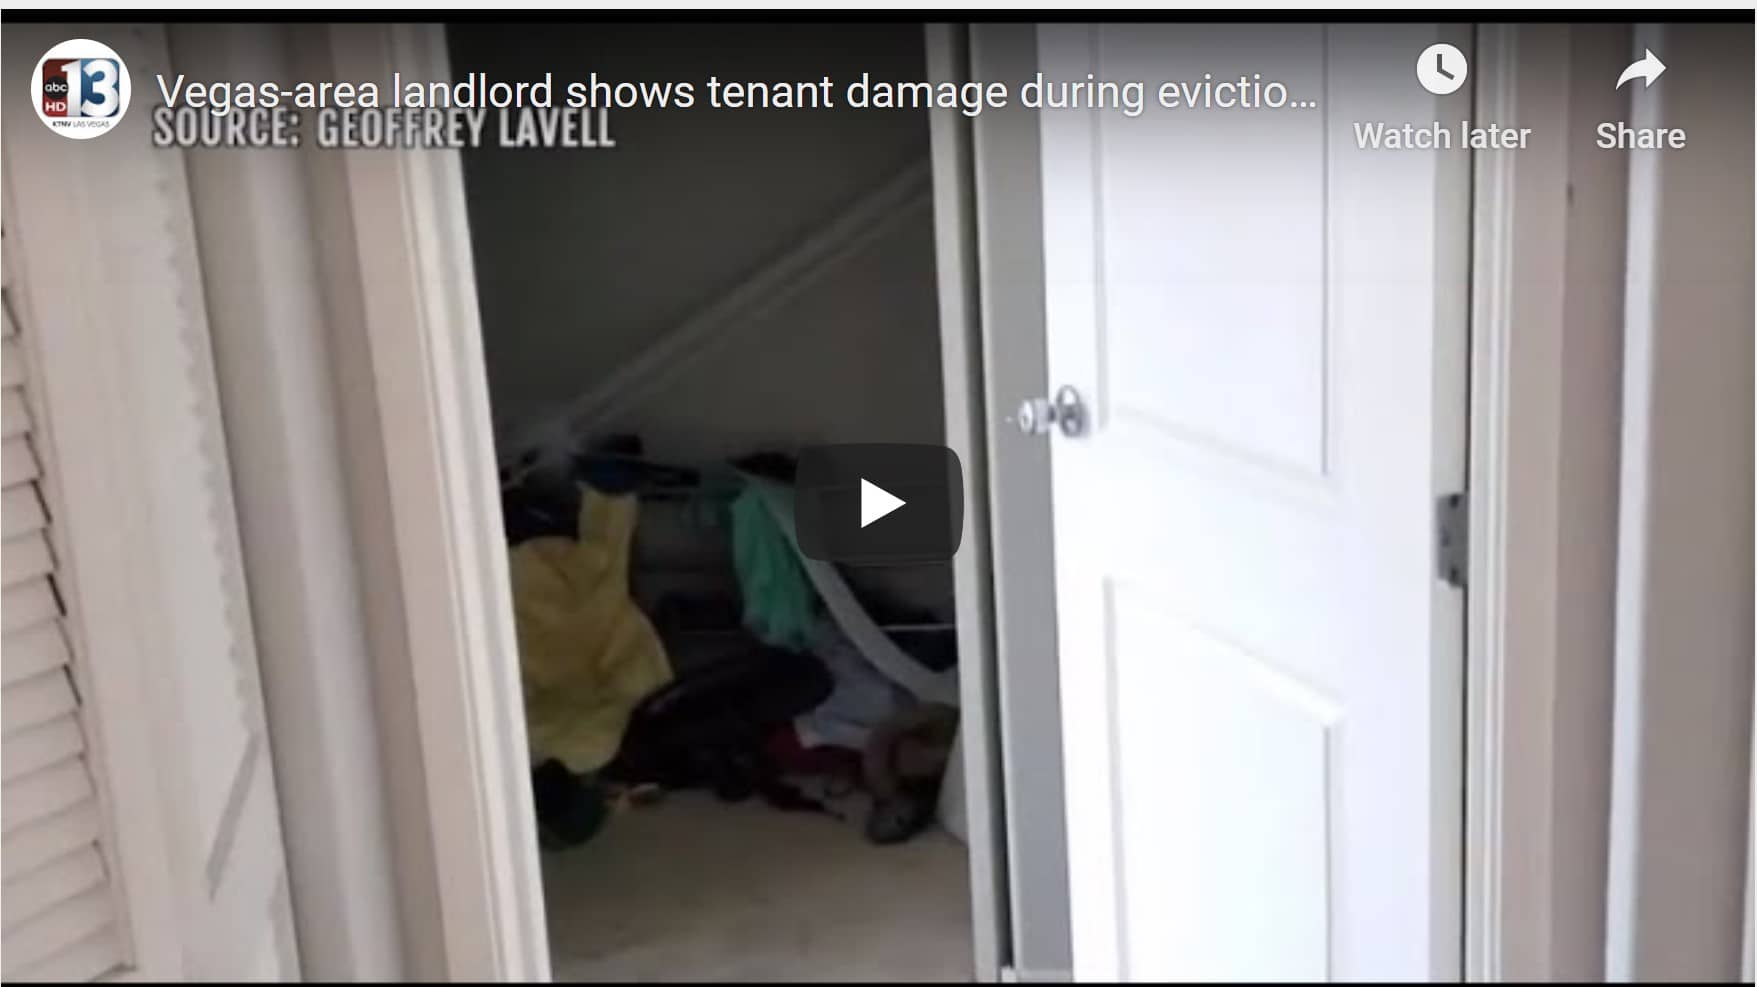 Vegas-area landlord shows tenant damage during eviction moratorium